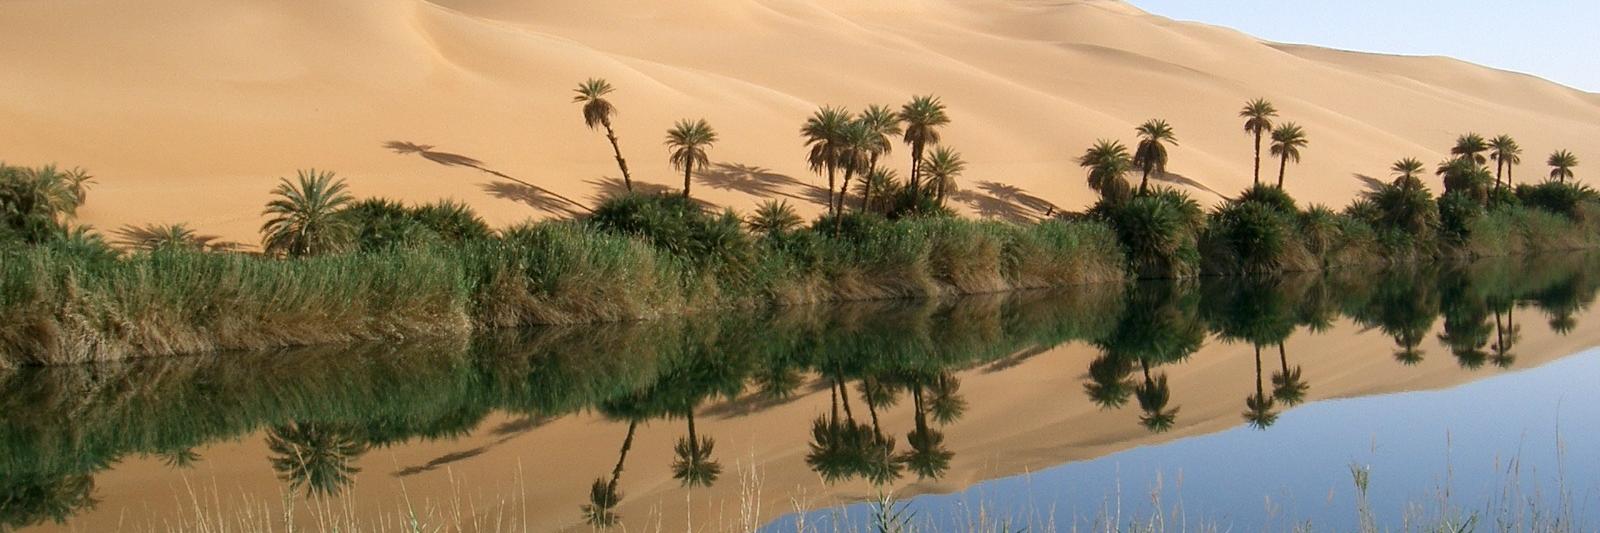 Oase in der Wüste, Lybien (c) www.pixabay.com